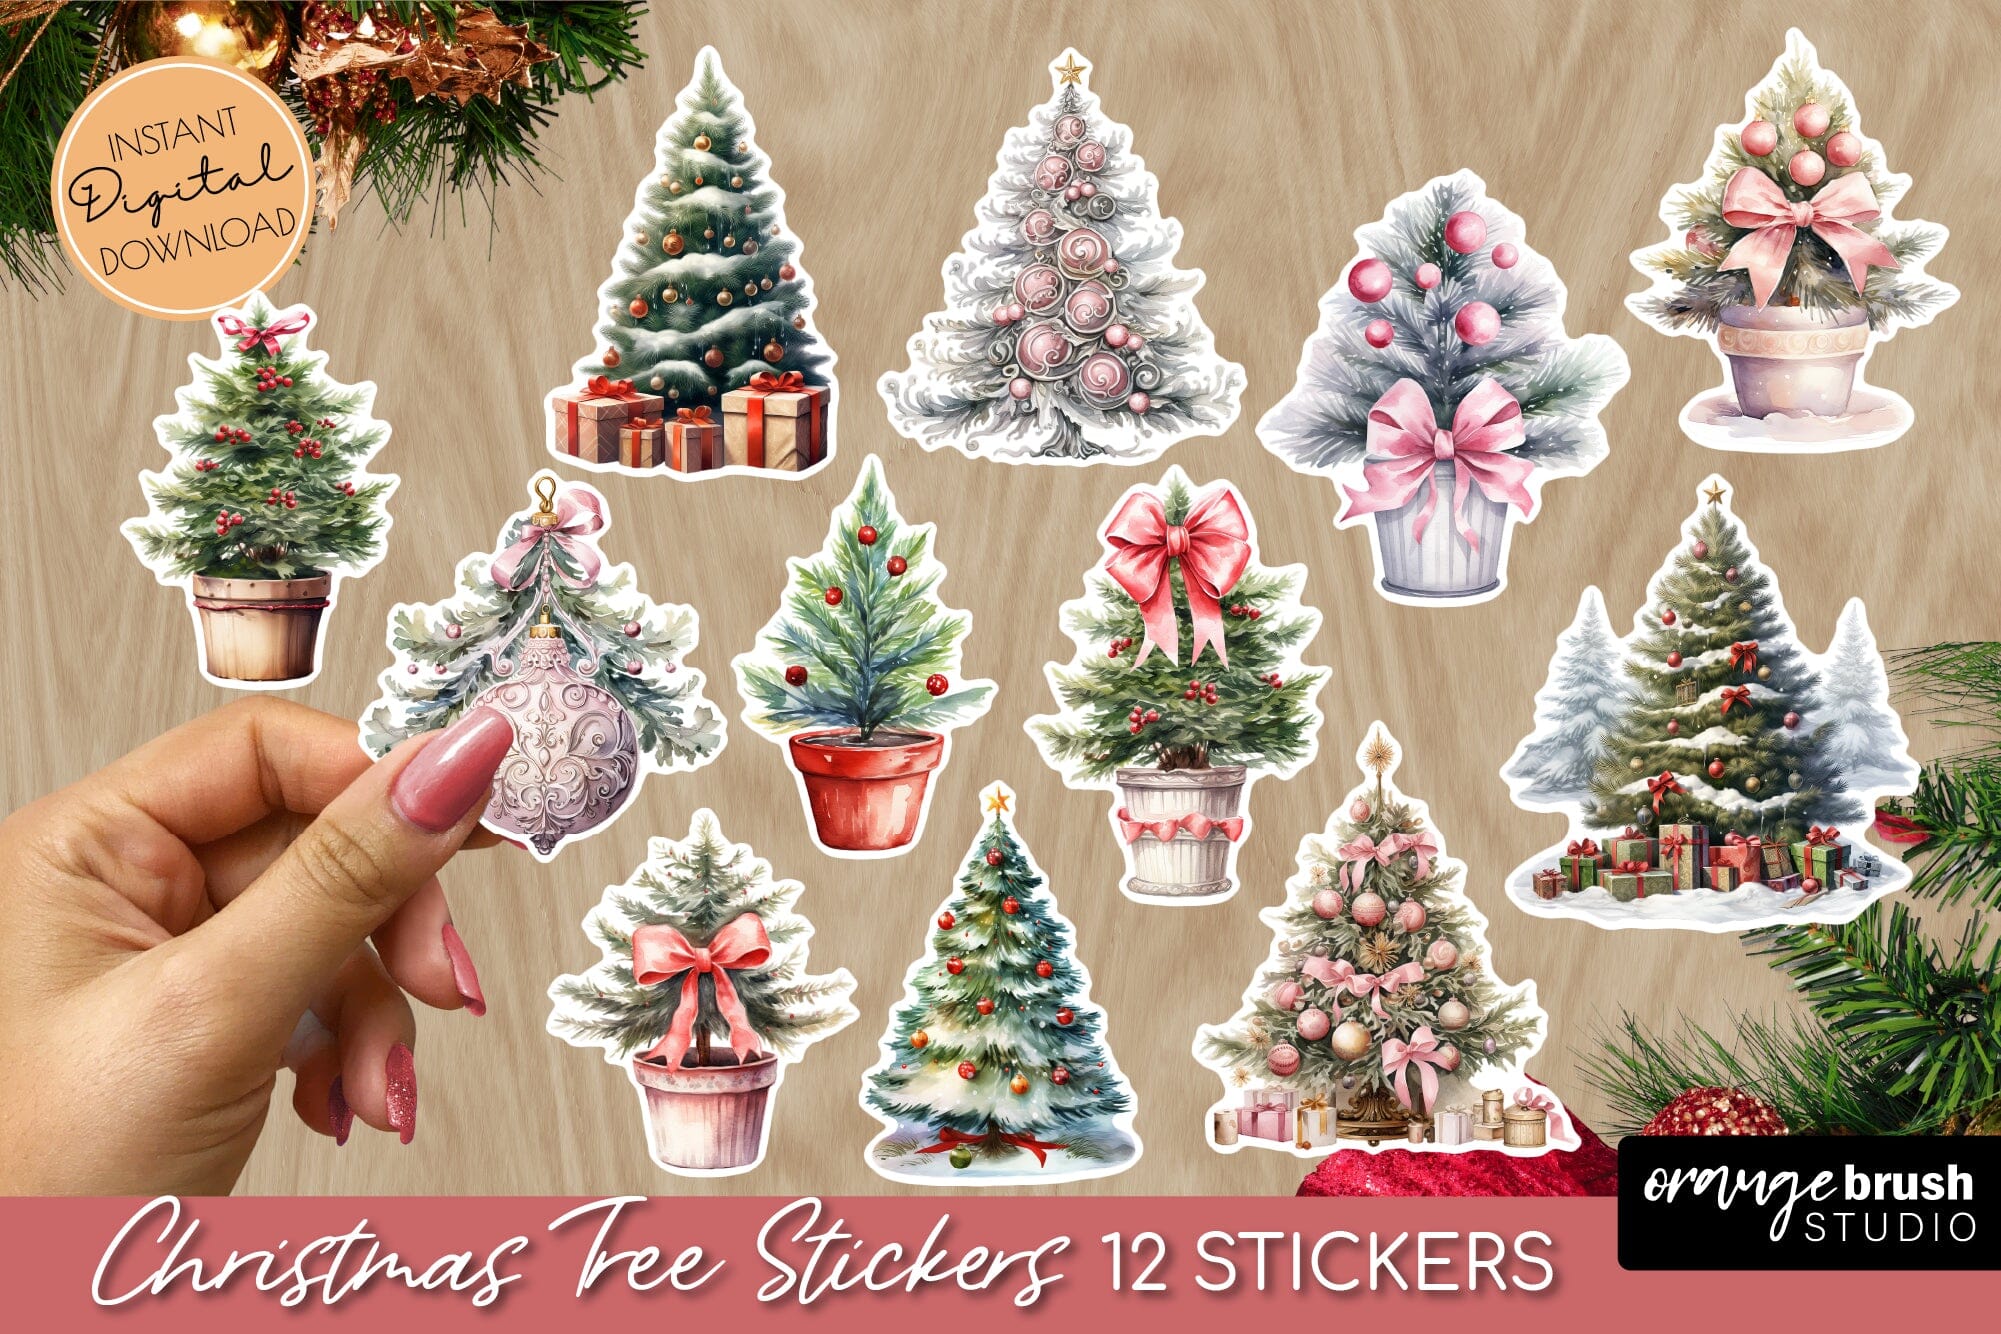 Vintage Christmas Stickers Vinyl Stickers Christmas Stickers / Robin /  Winter / Snow Globe / Santa / Christmas Tree / Journal Stickers 